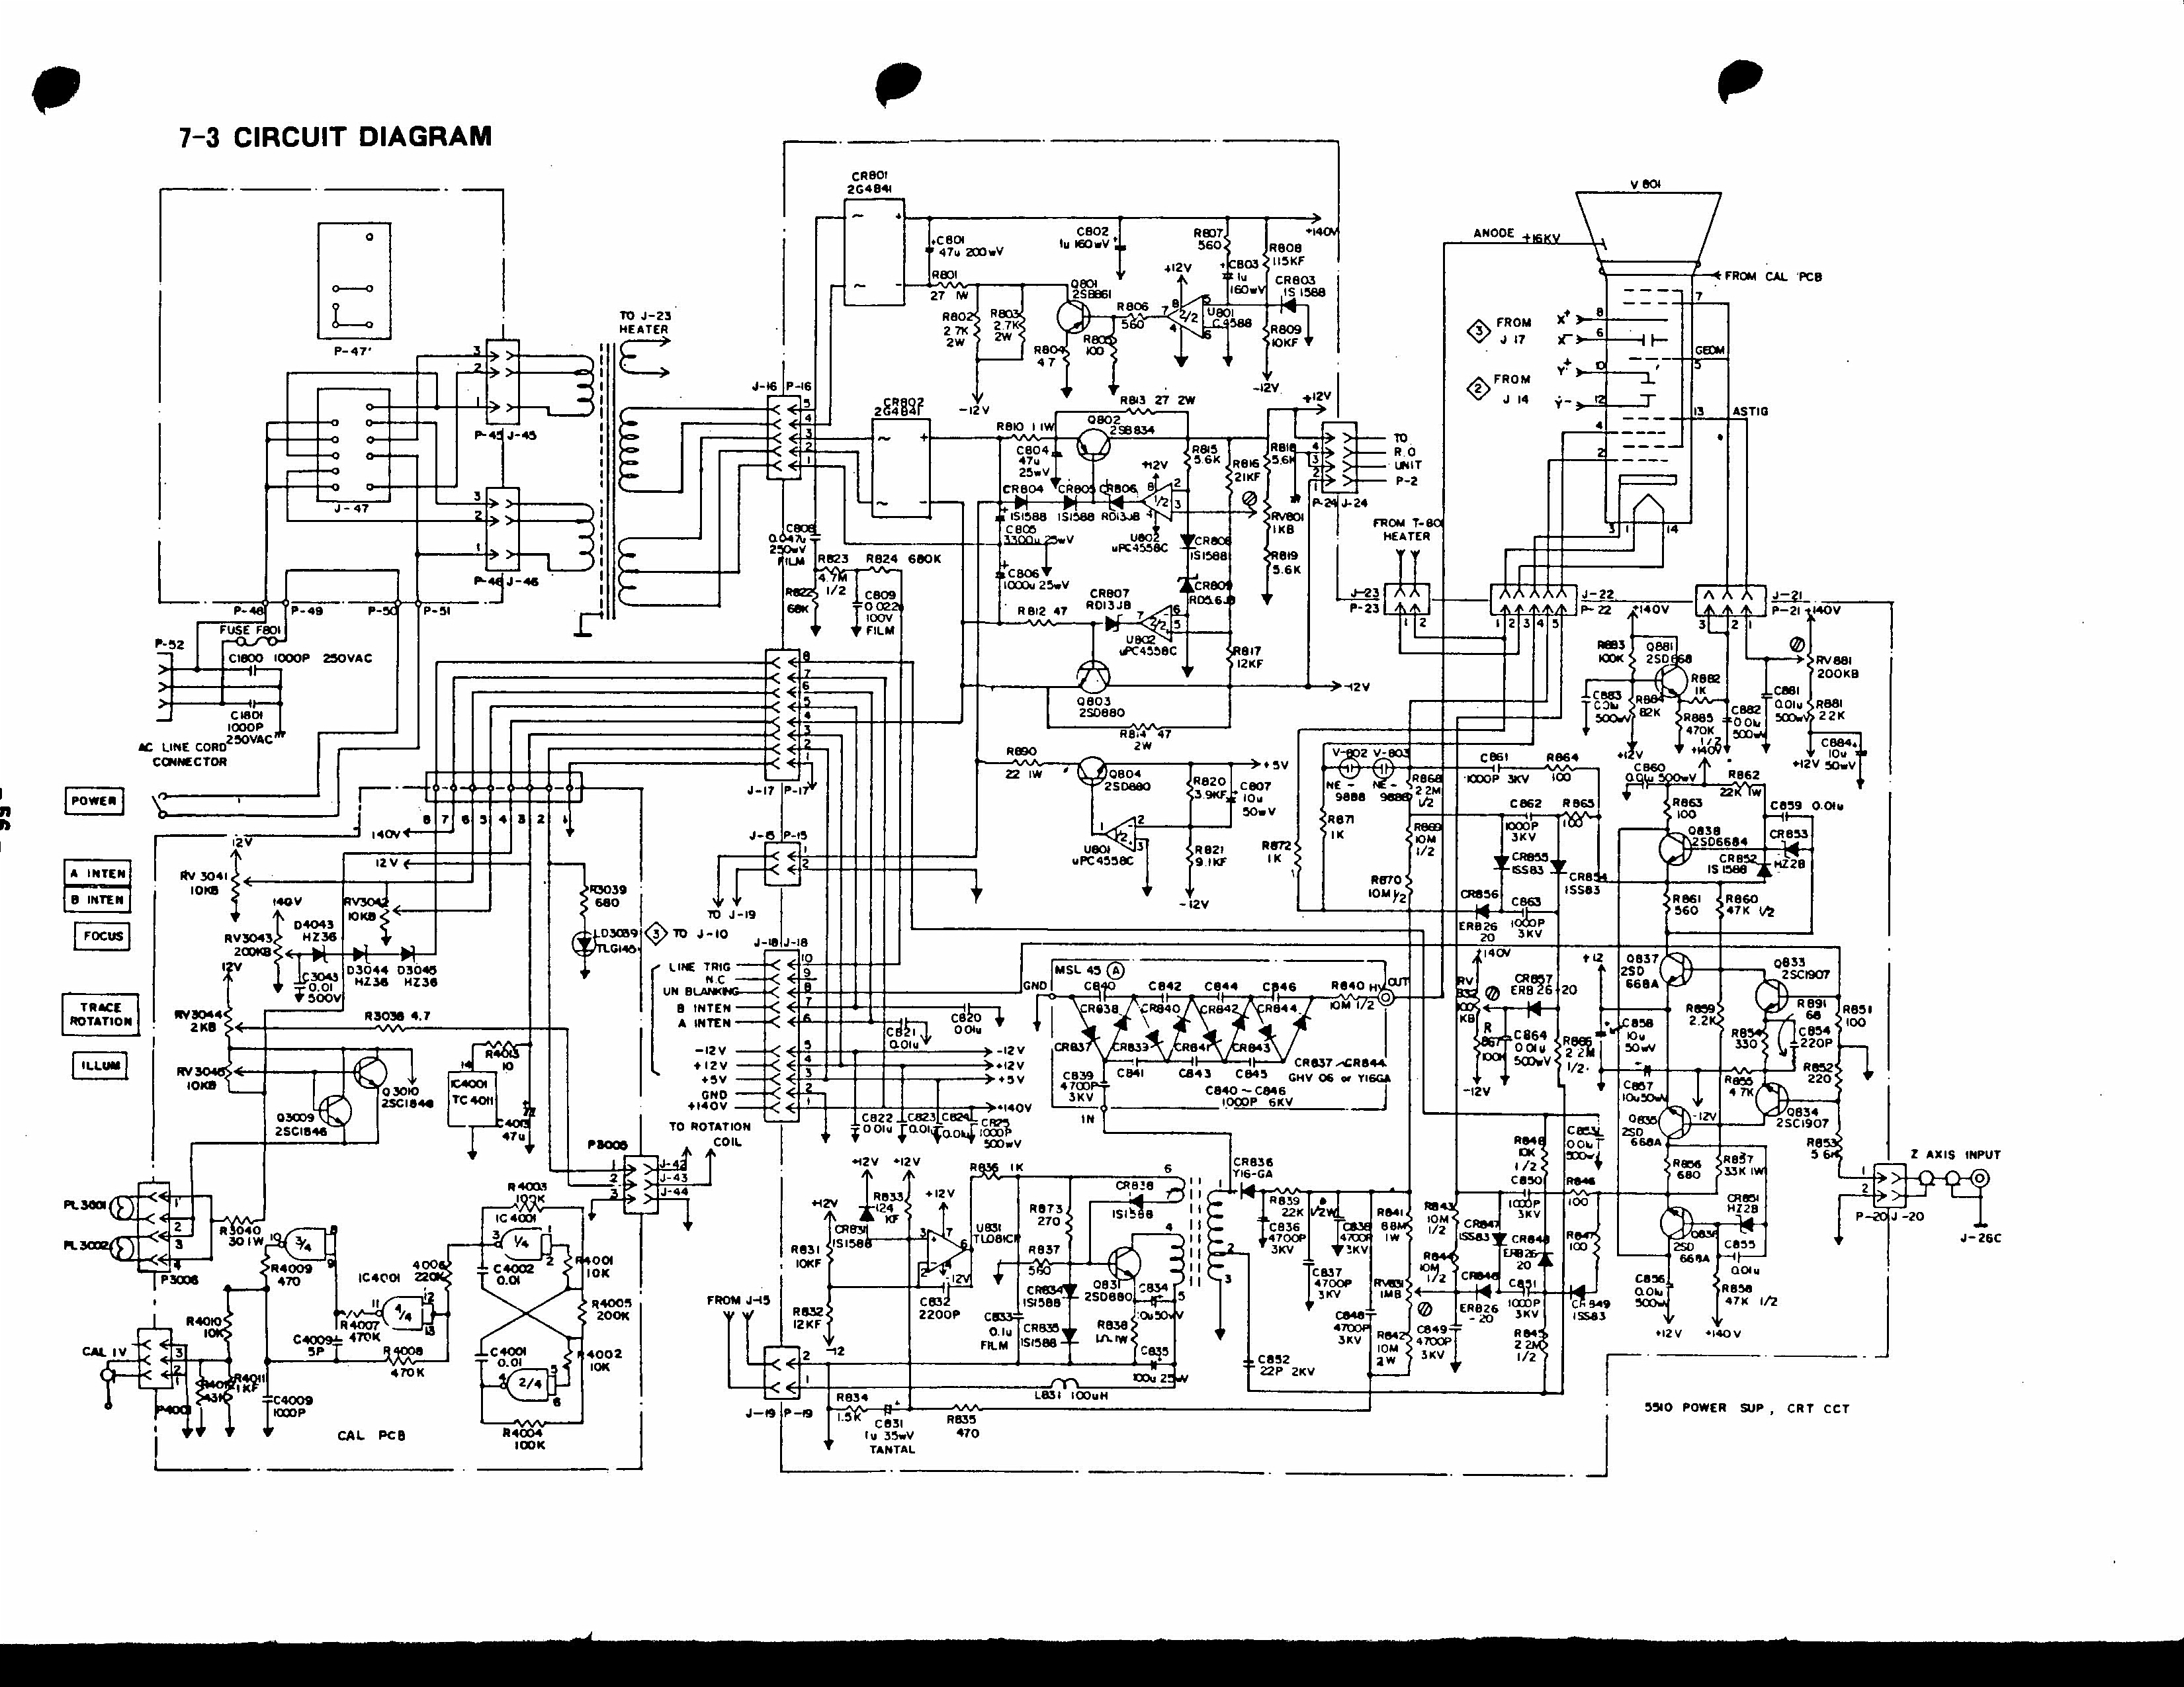 tenma 72845 dual trace 100Mz oscilloscope
power supply/ vertical